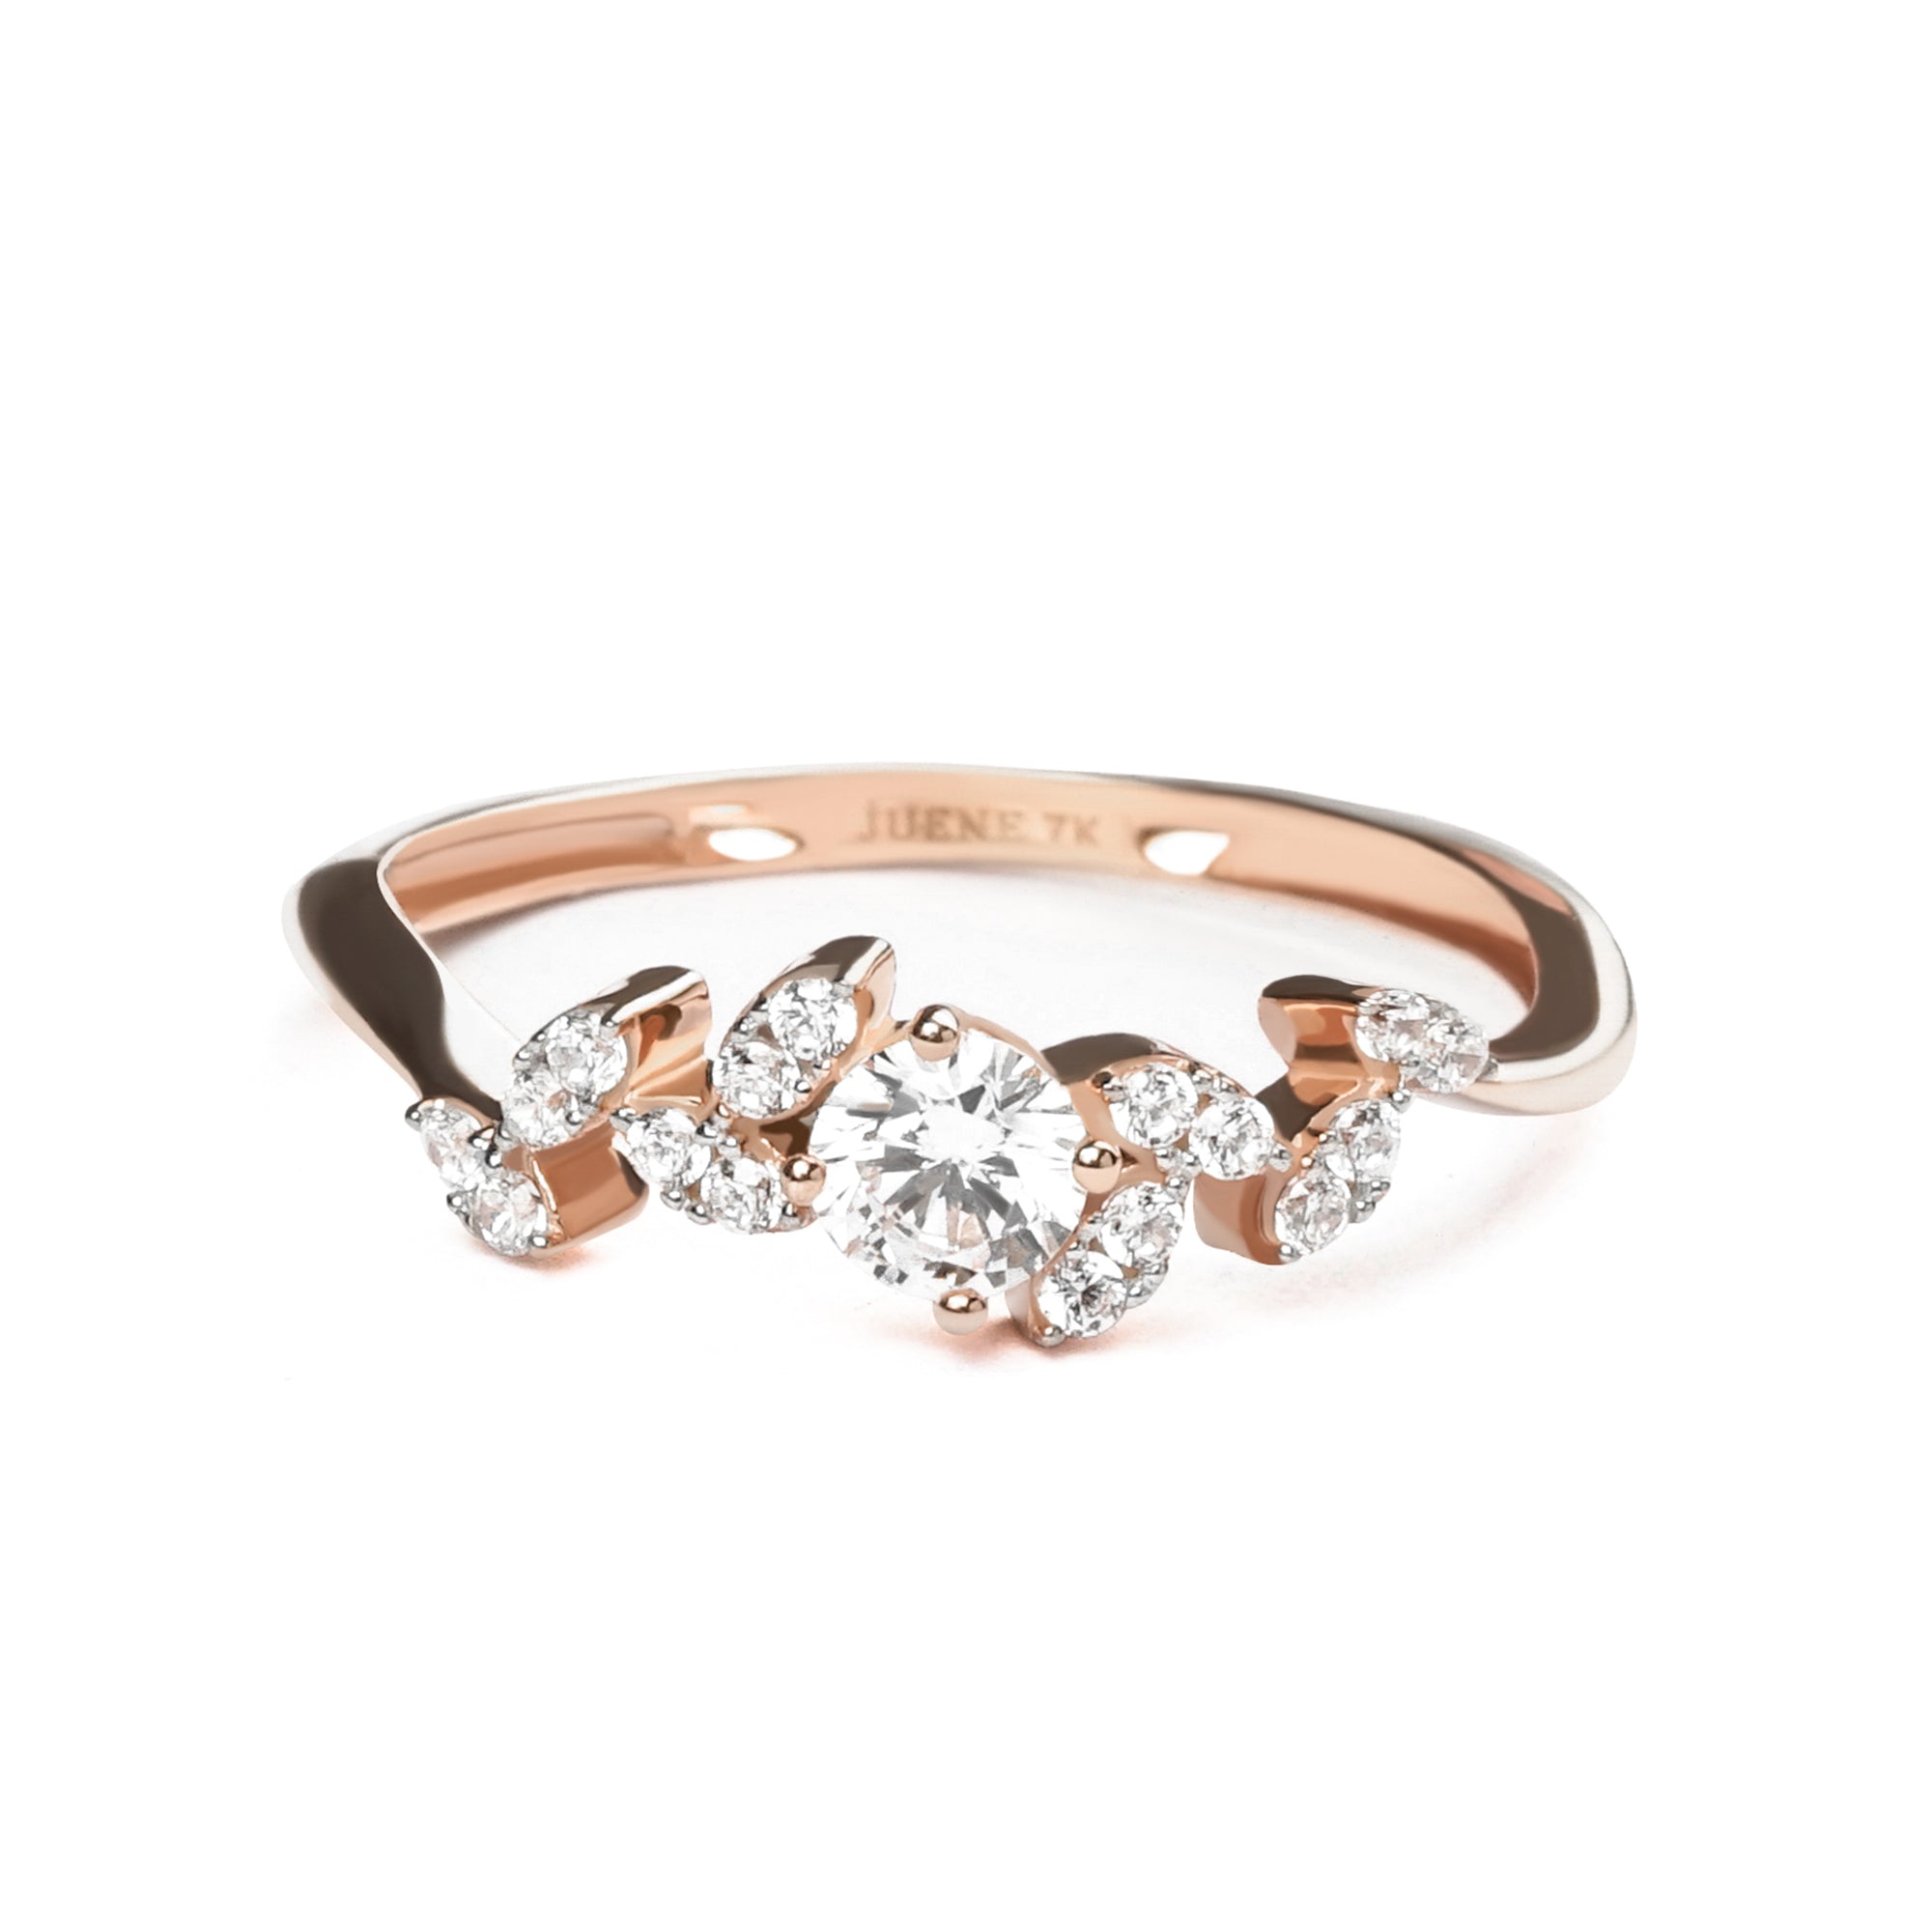 Cana Gold Ring - Mariposa - Juene Jewelry